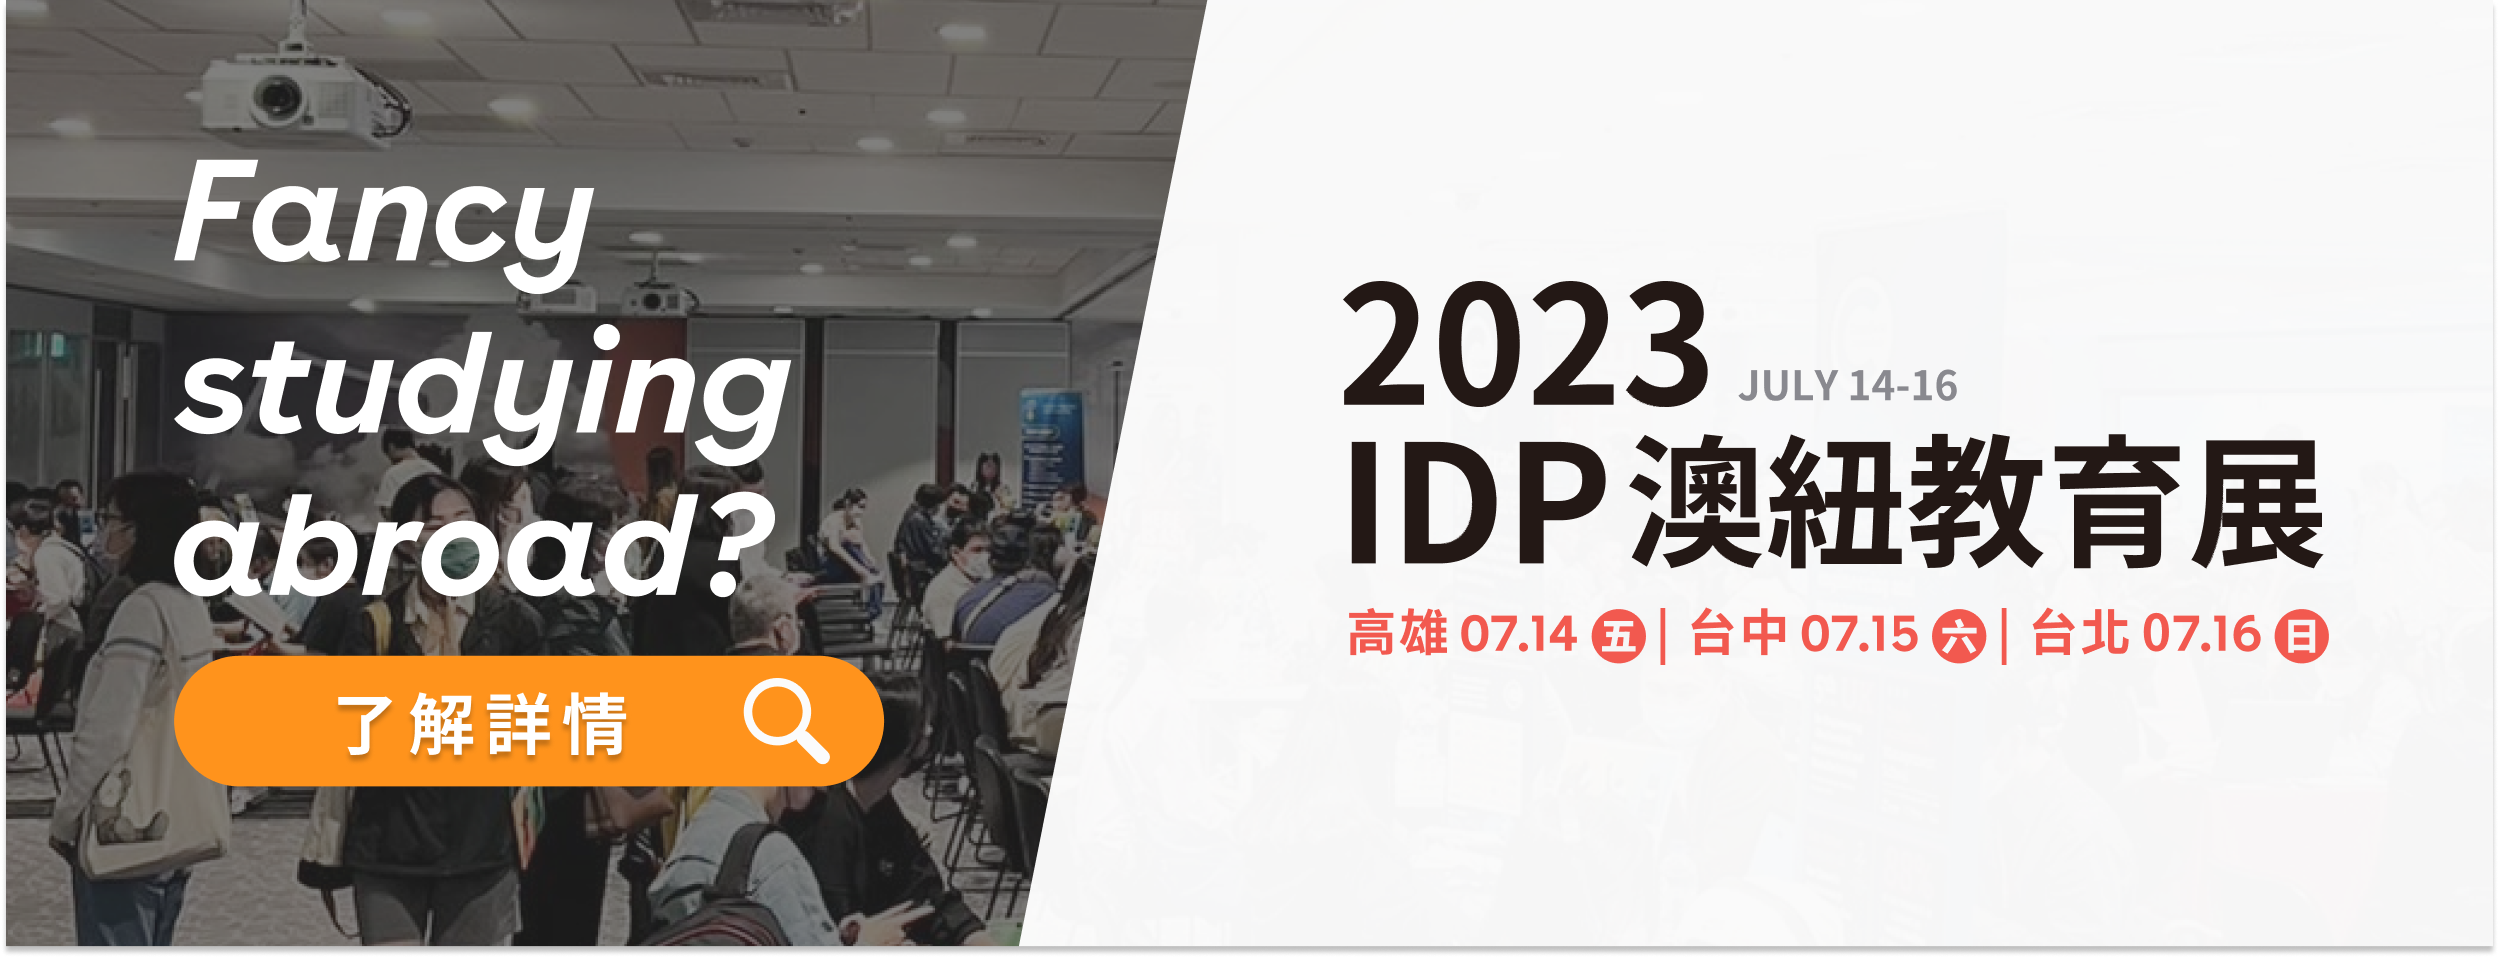 2023 IDP 澳紐教育展 7 月 14 – 16 日於高雄、台中、台北三地舉辦